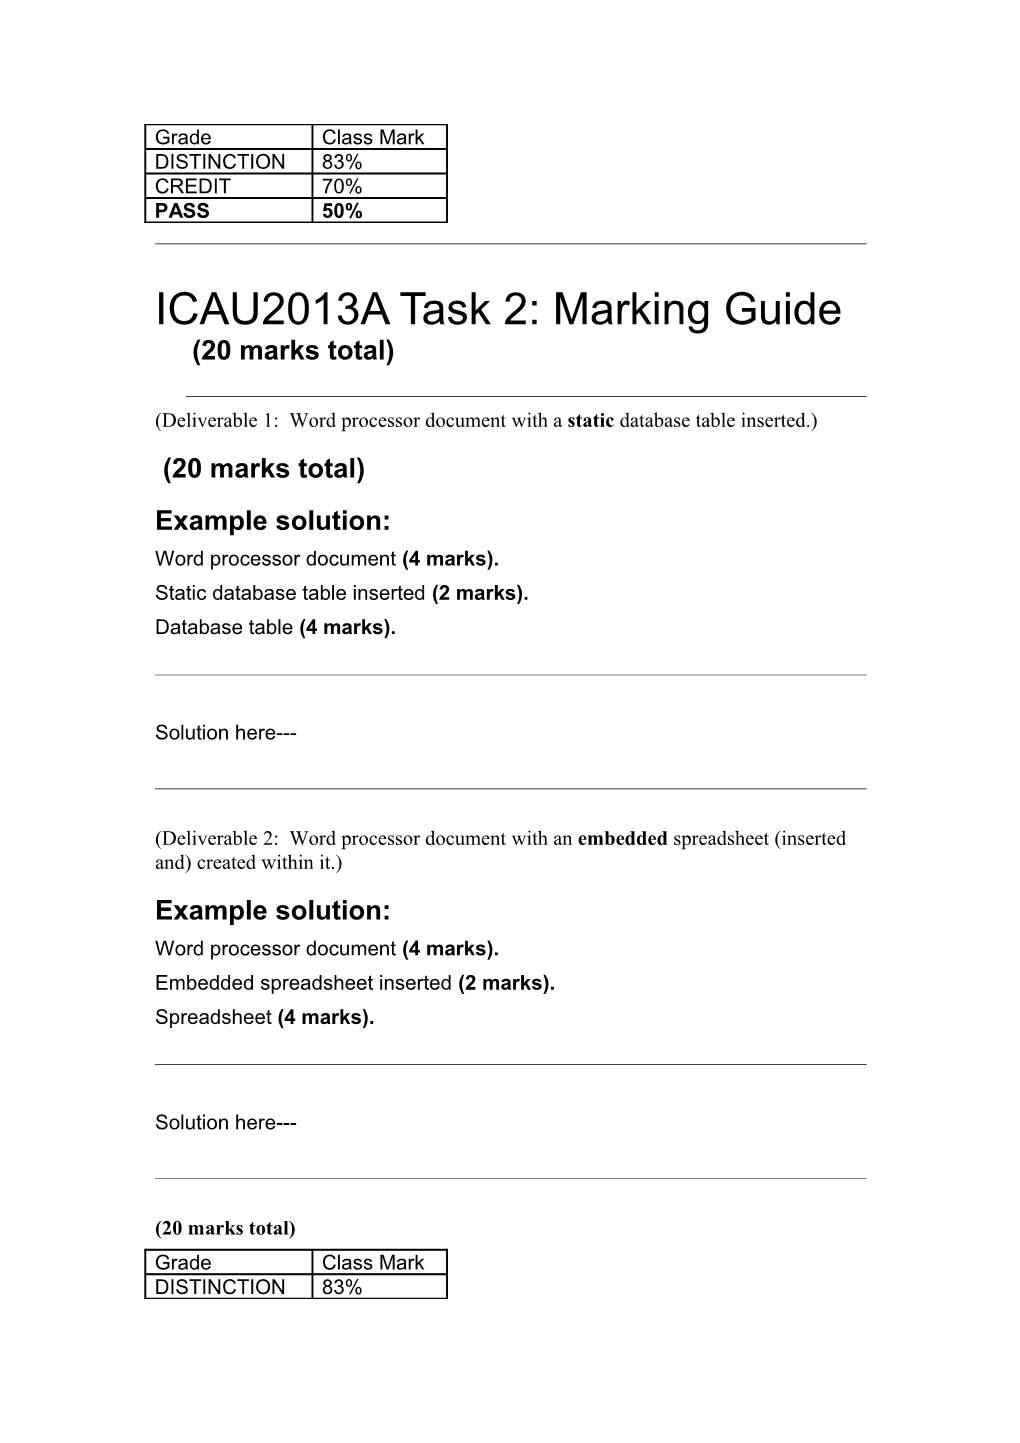 ICAU2013A Task 2: Marking Guide (20 Marks Total)